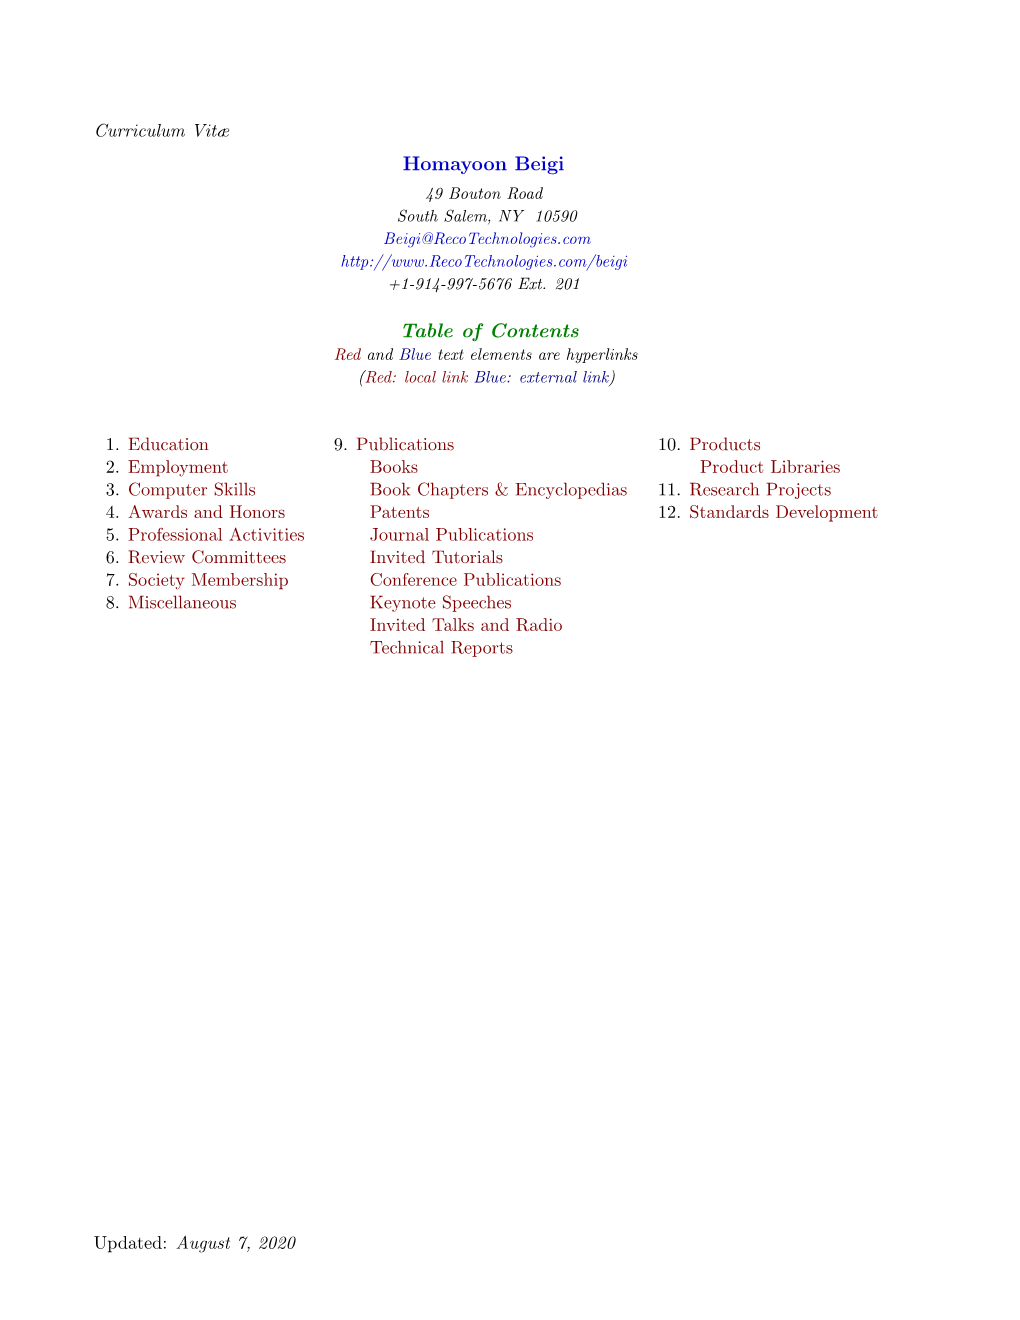 Homayoon Beigi Table of Contents